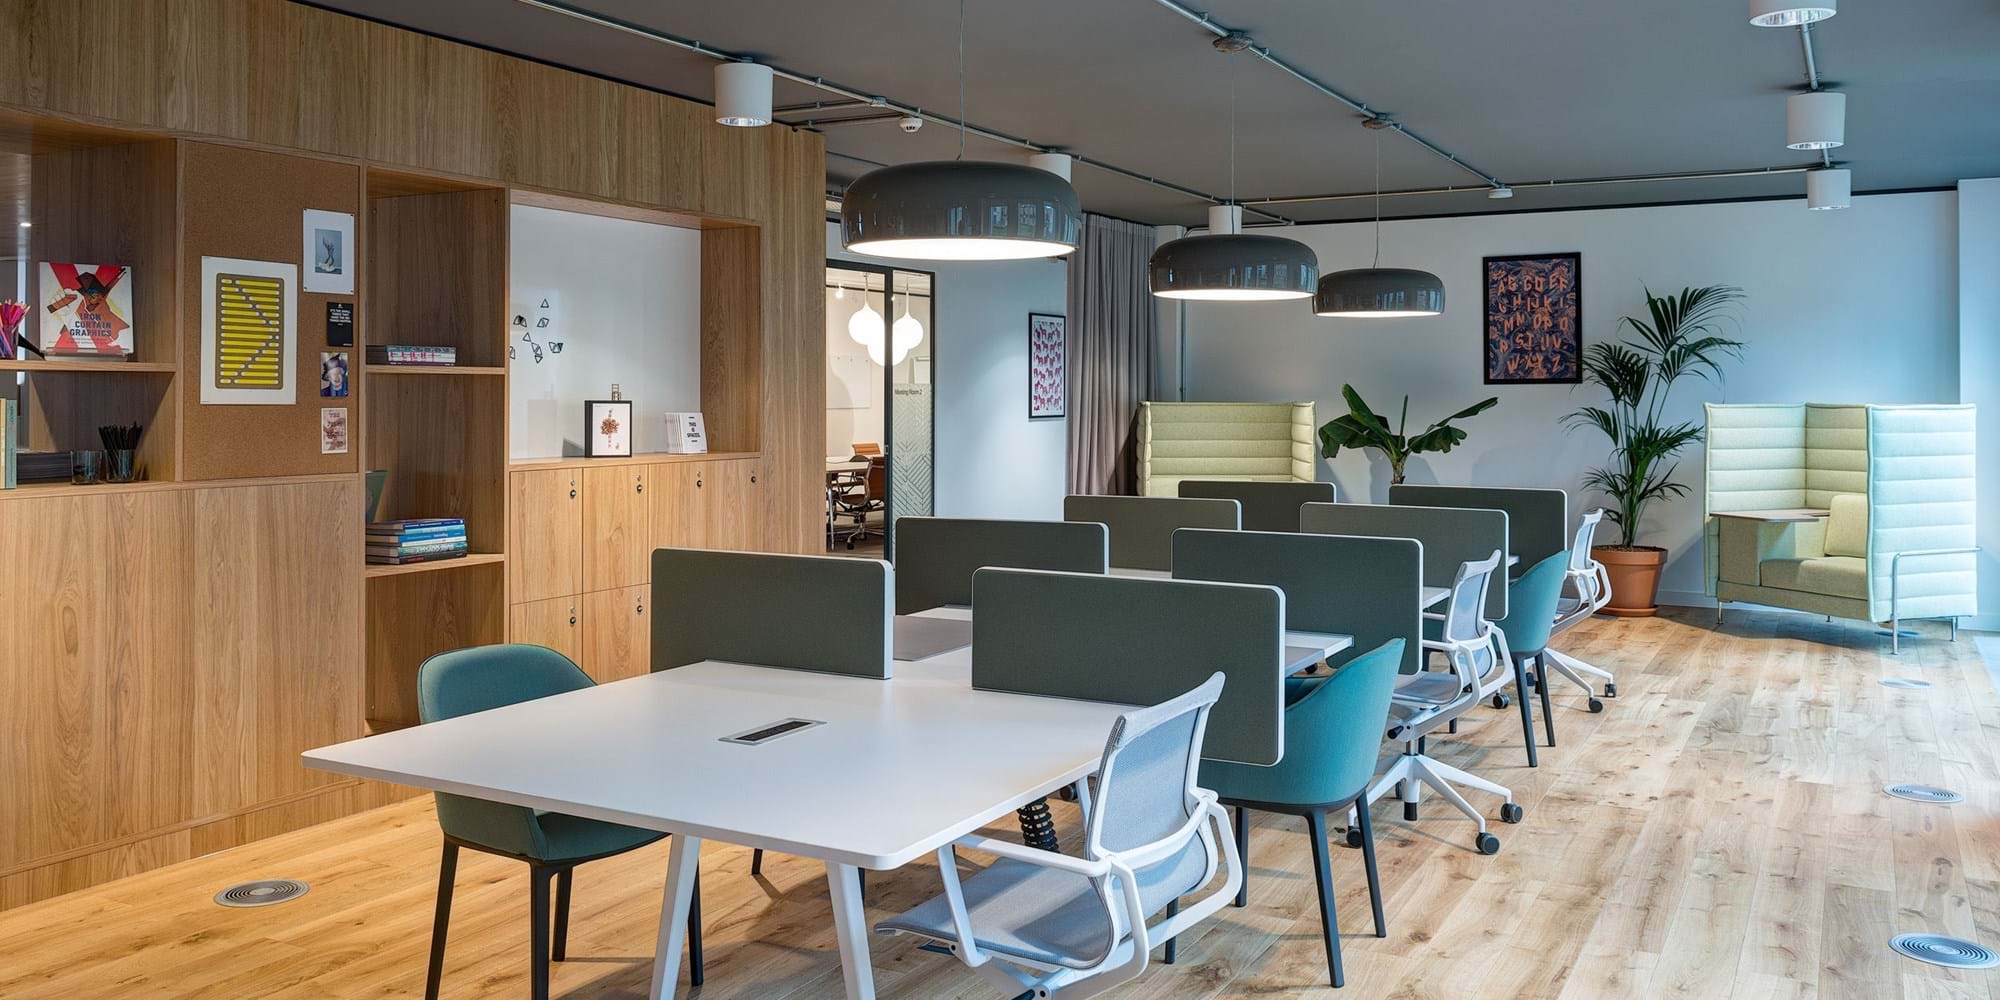 Modus Workspace office design, fit out and refurbishment - Spaces - Uxbridge - Spaces Uxbridge 08 highres sRGB.jpg